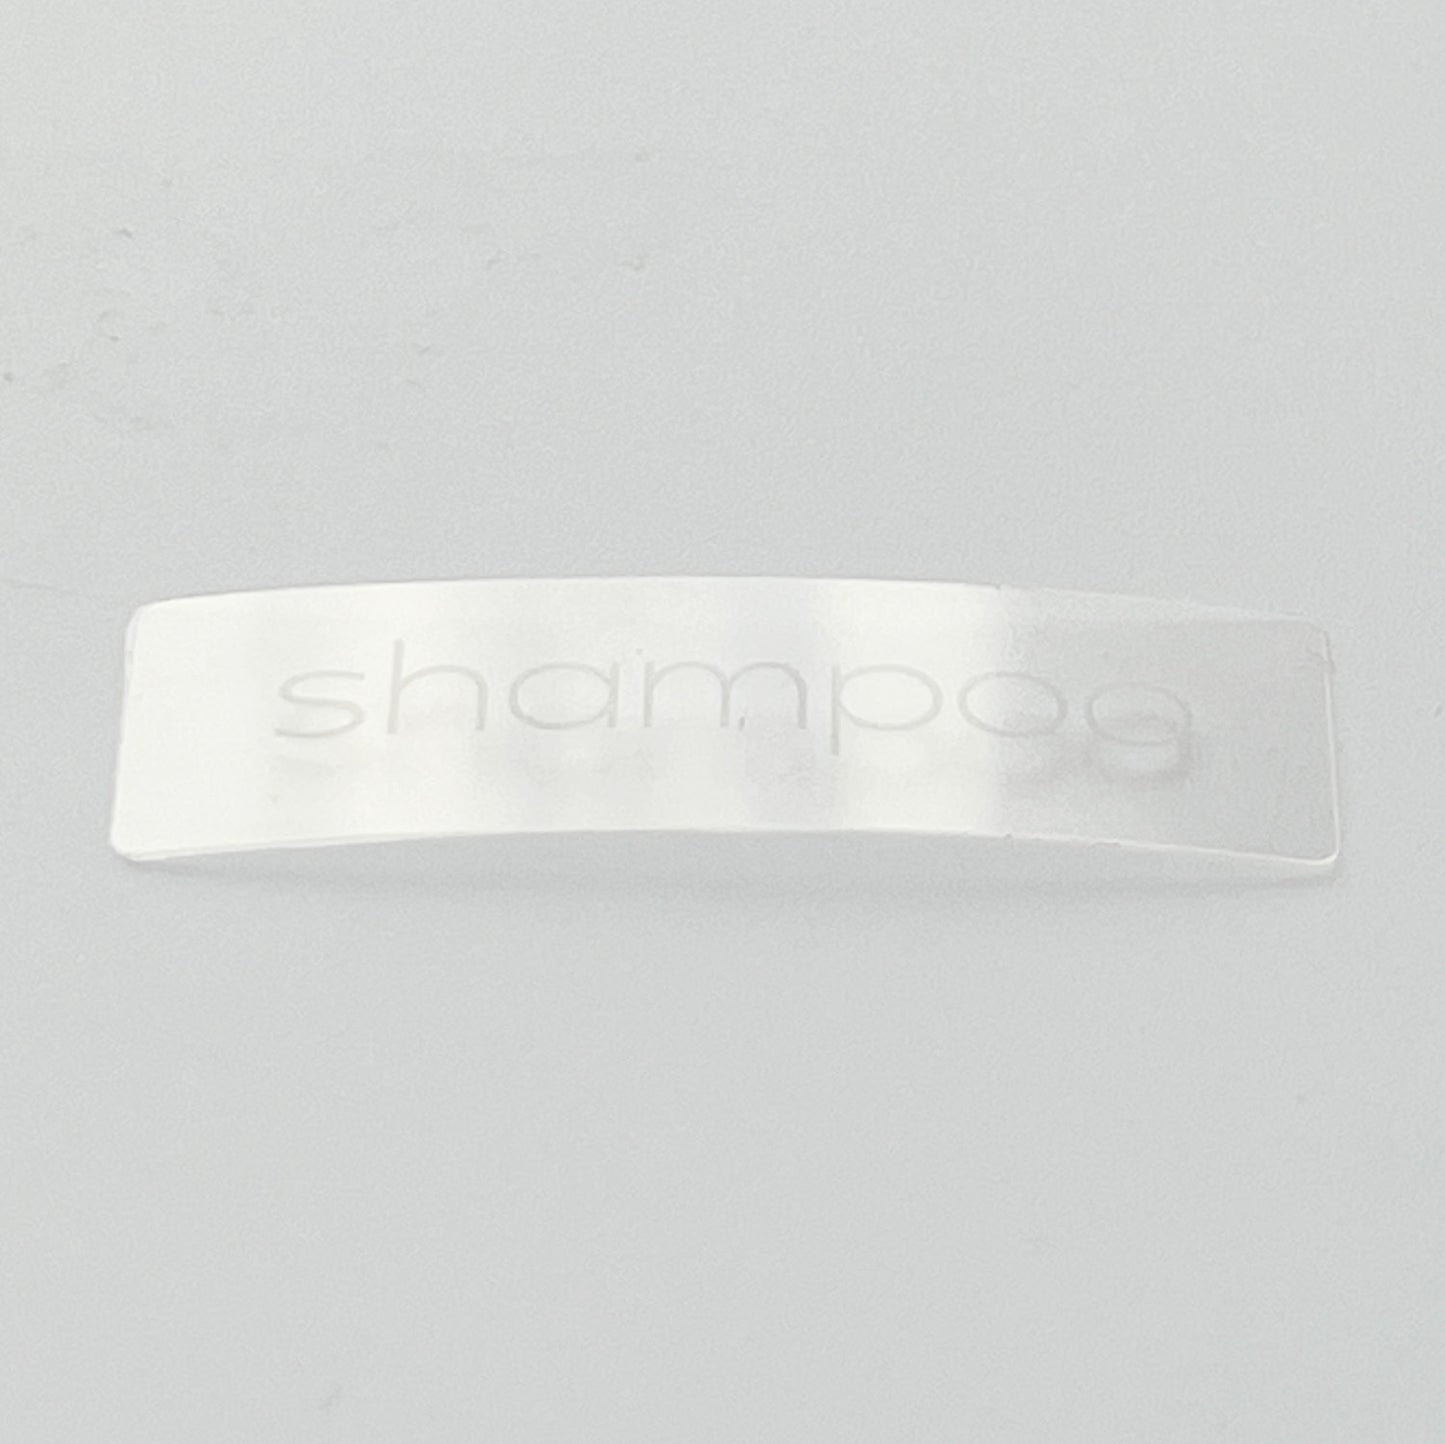 Shampoo | Label